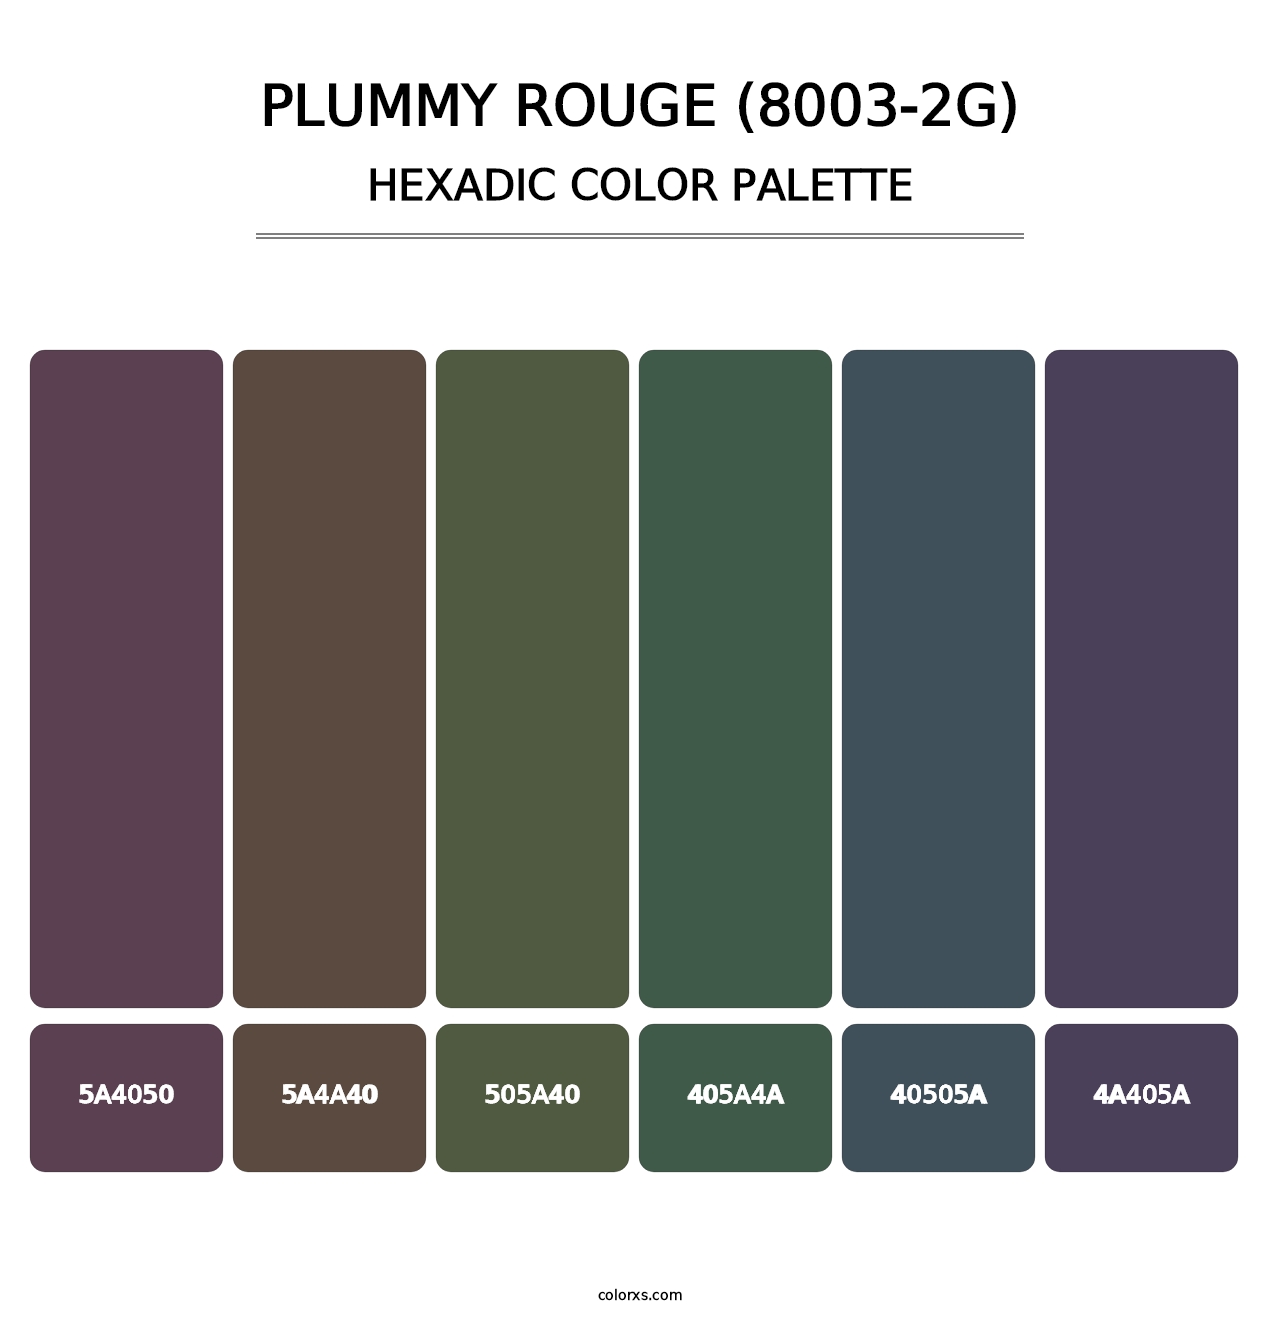 Plummy Rouge (8003-2G) - Hexadic Color Palette